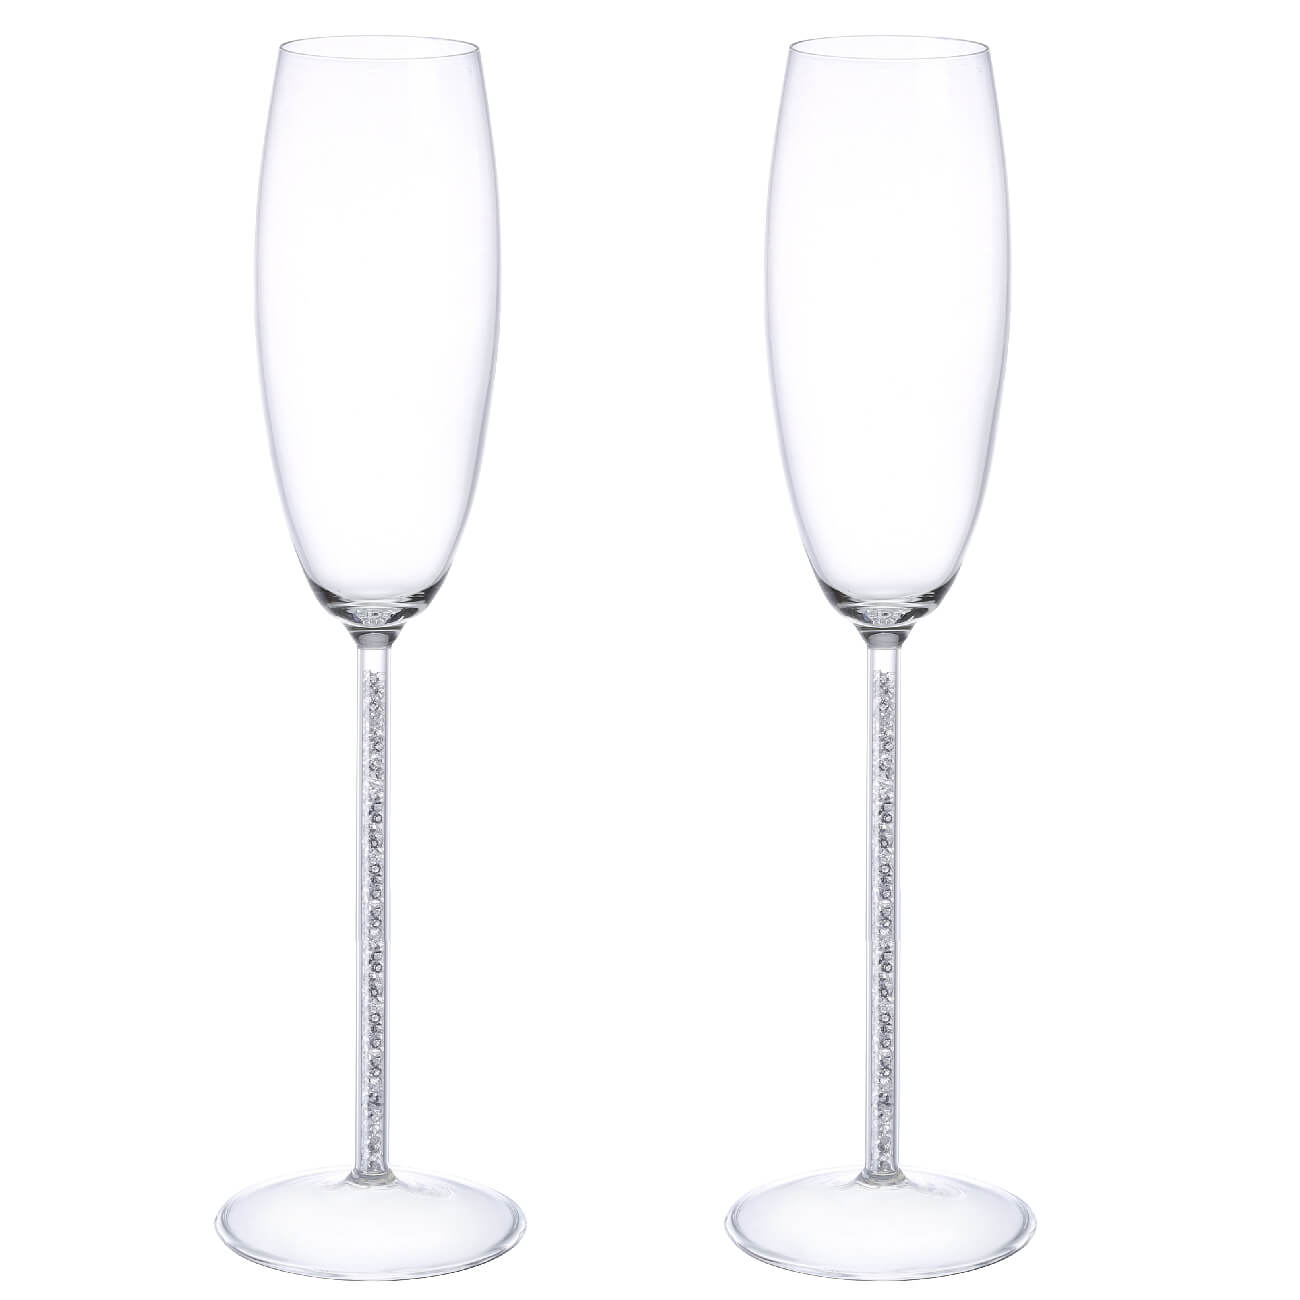 Kuchenland Бокал для шампанского, 180 мл, 2 шт, стекло/стразы, Crystal decor